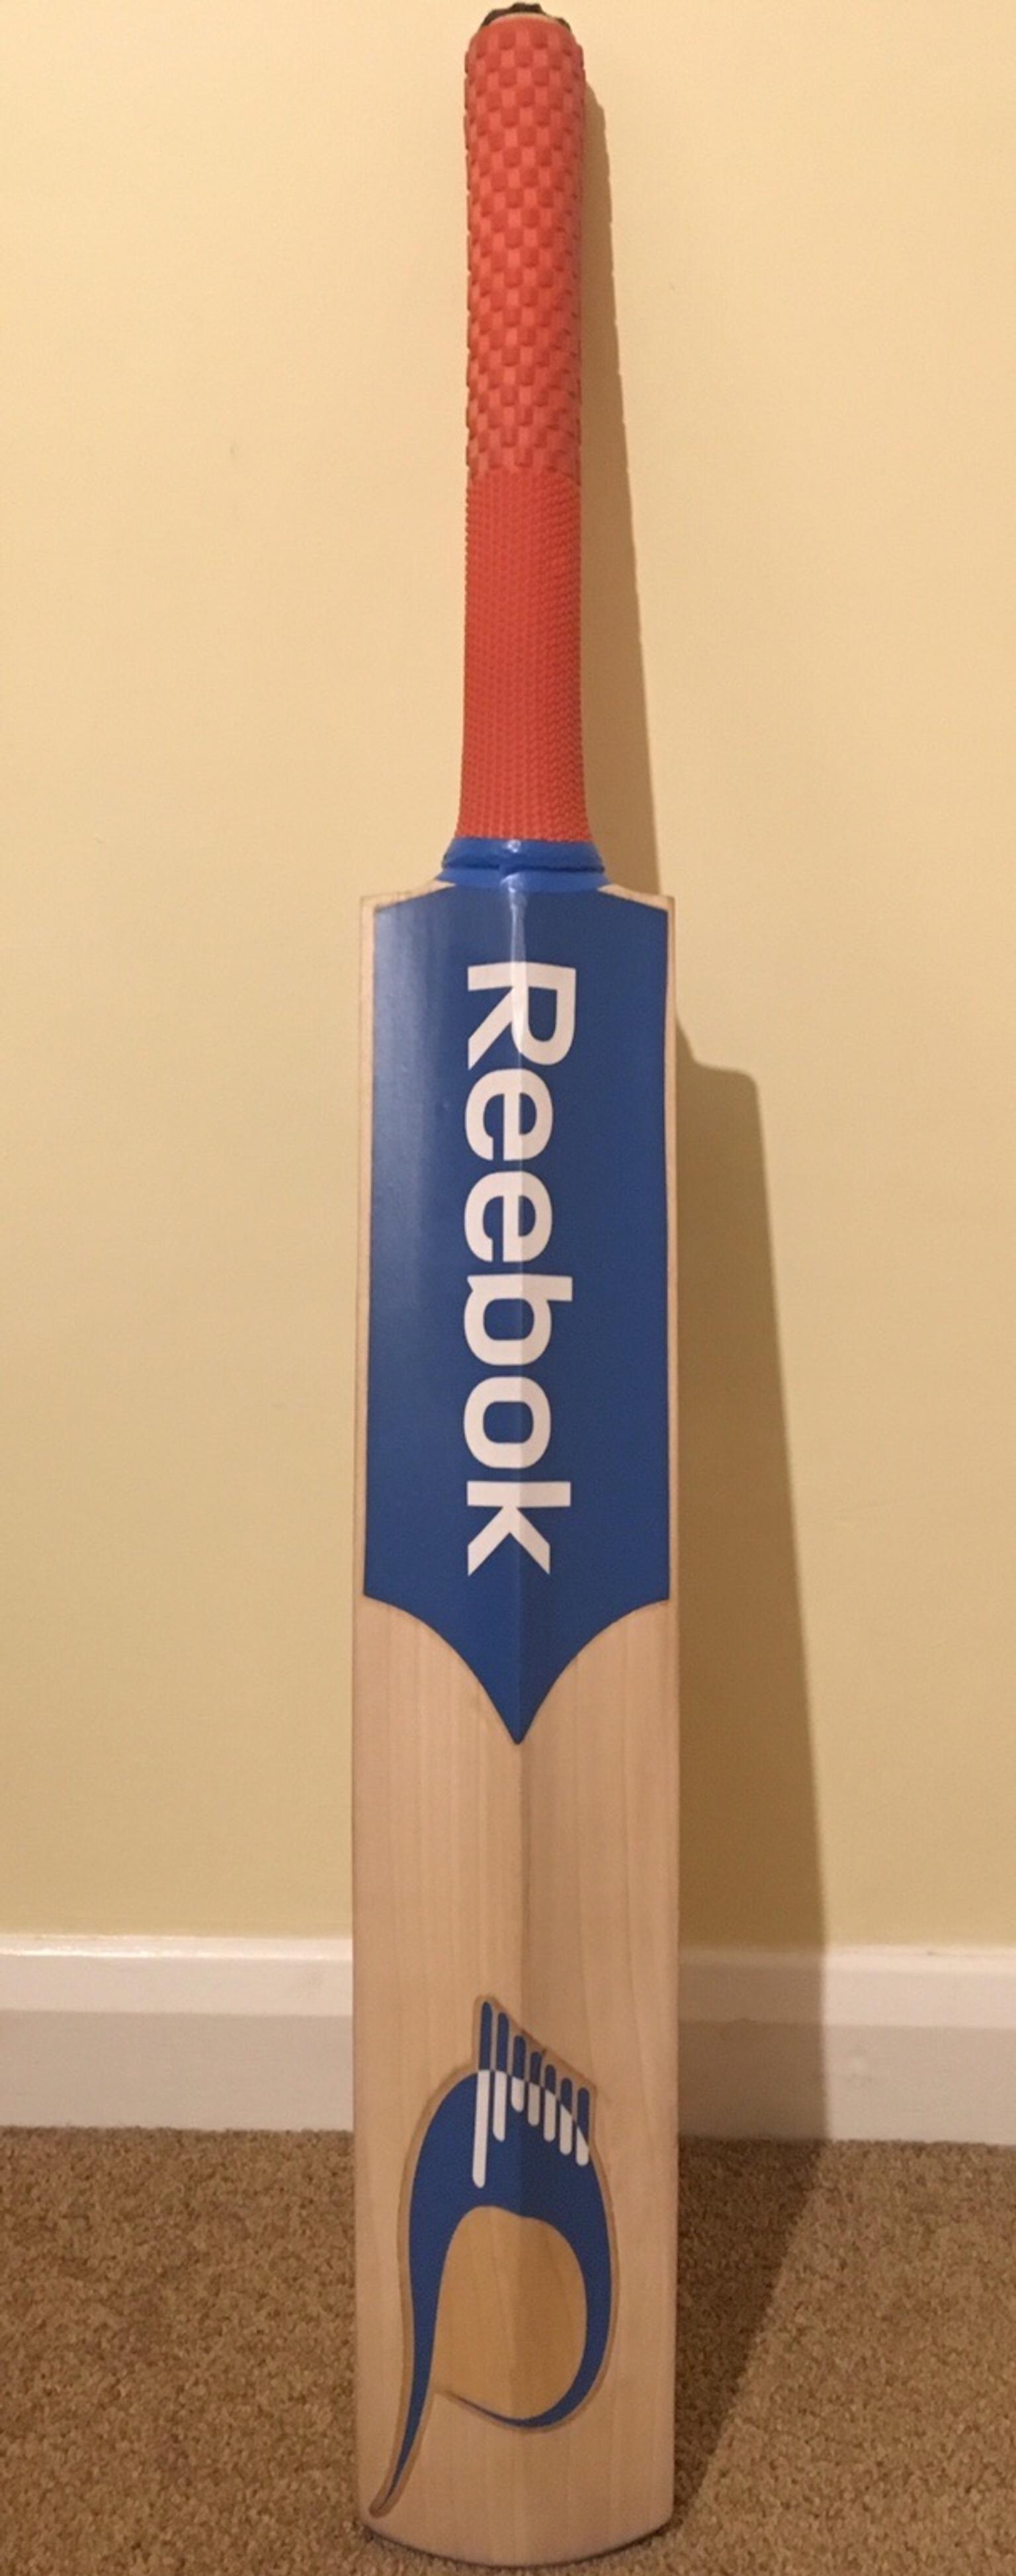 reebok cricket bats english willow